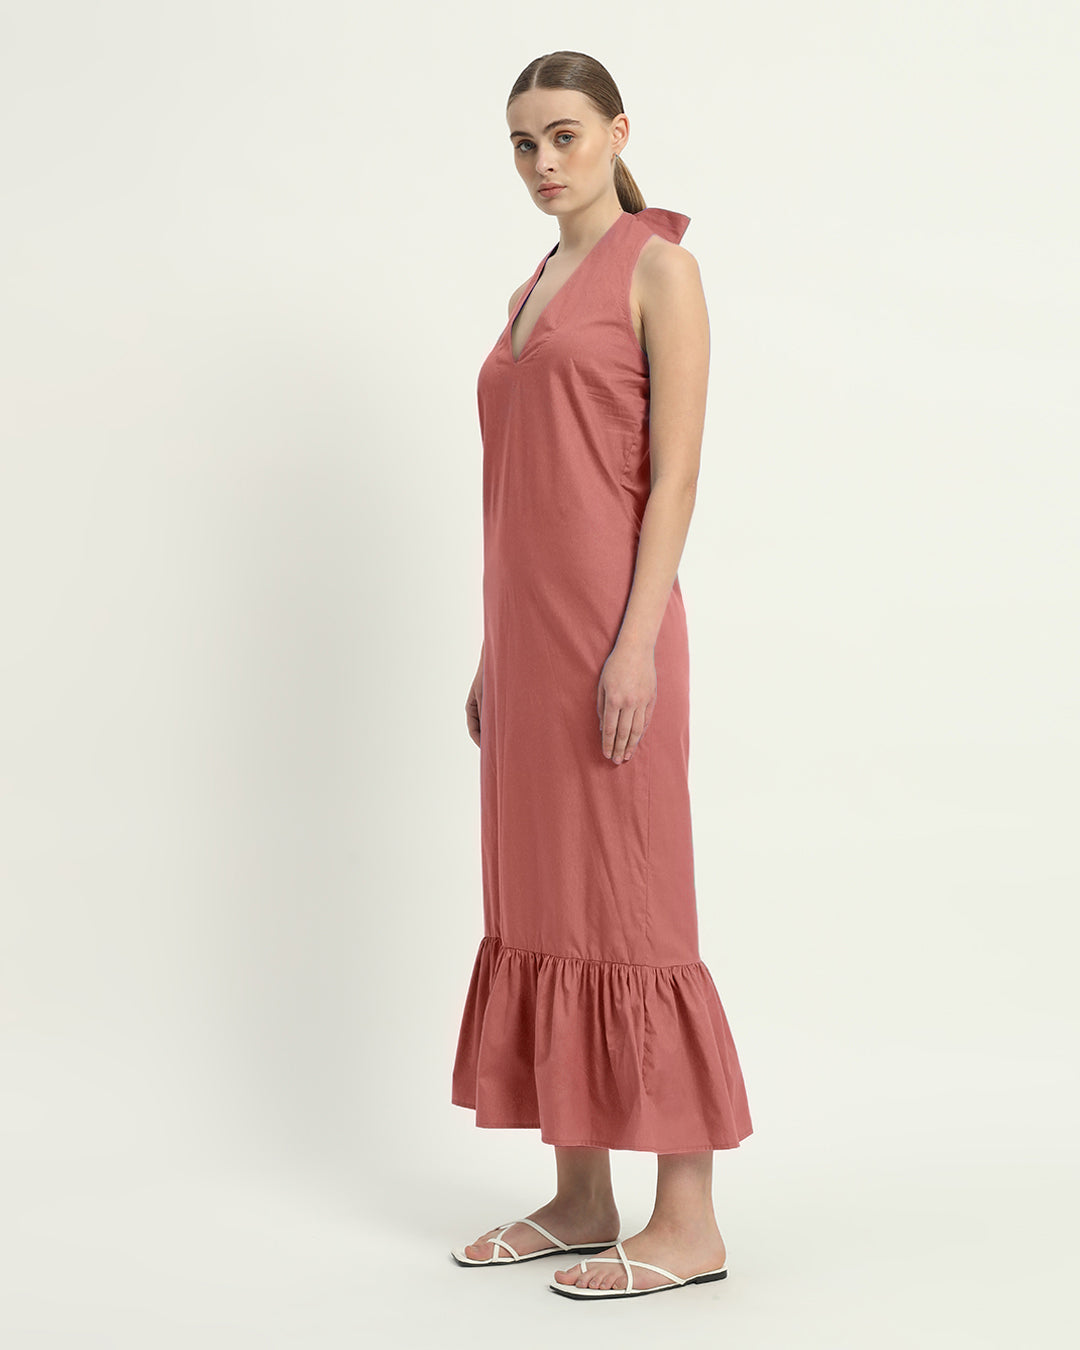 The Ivory Pink Wellsville Cotton Dress